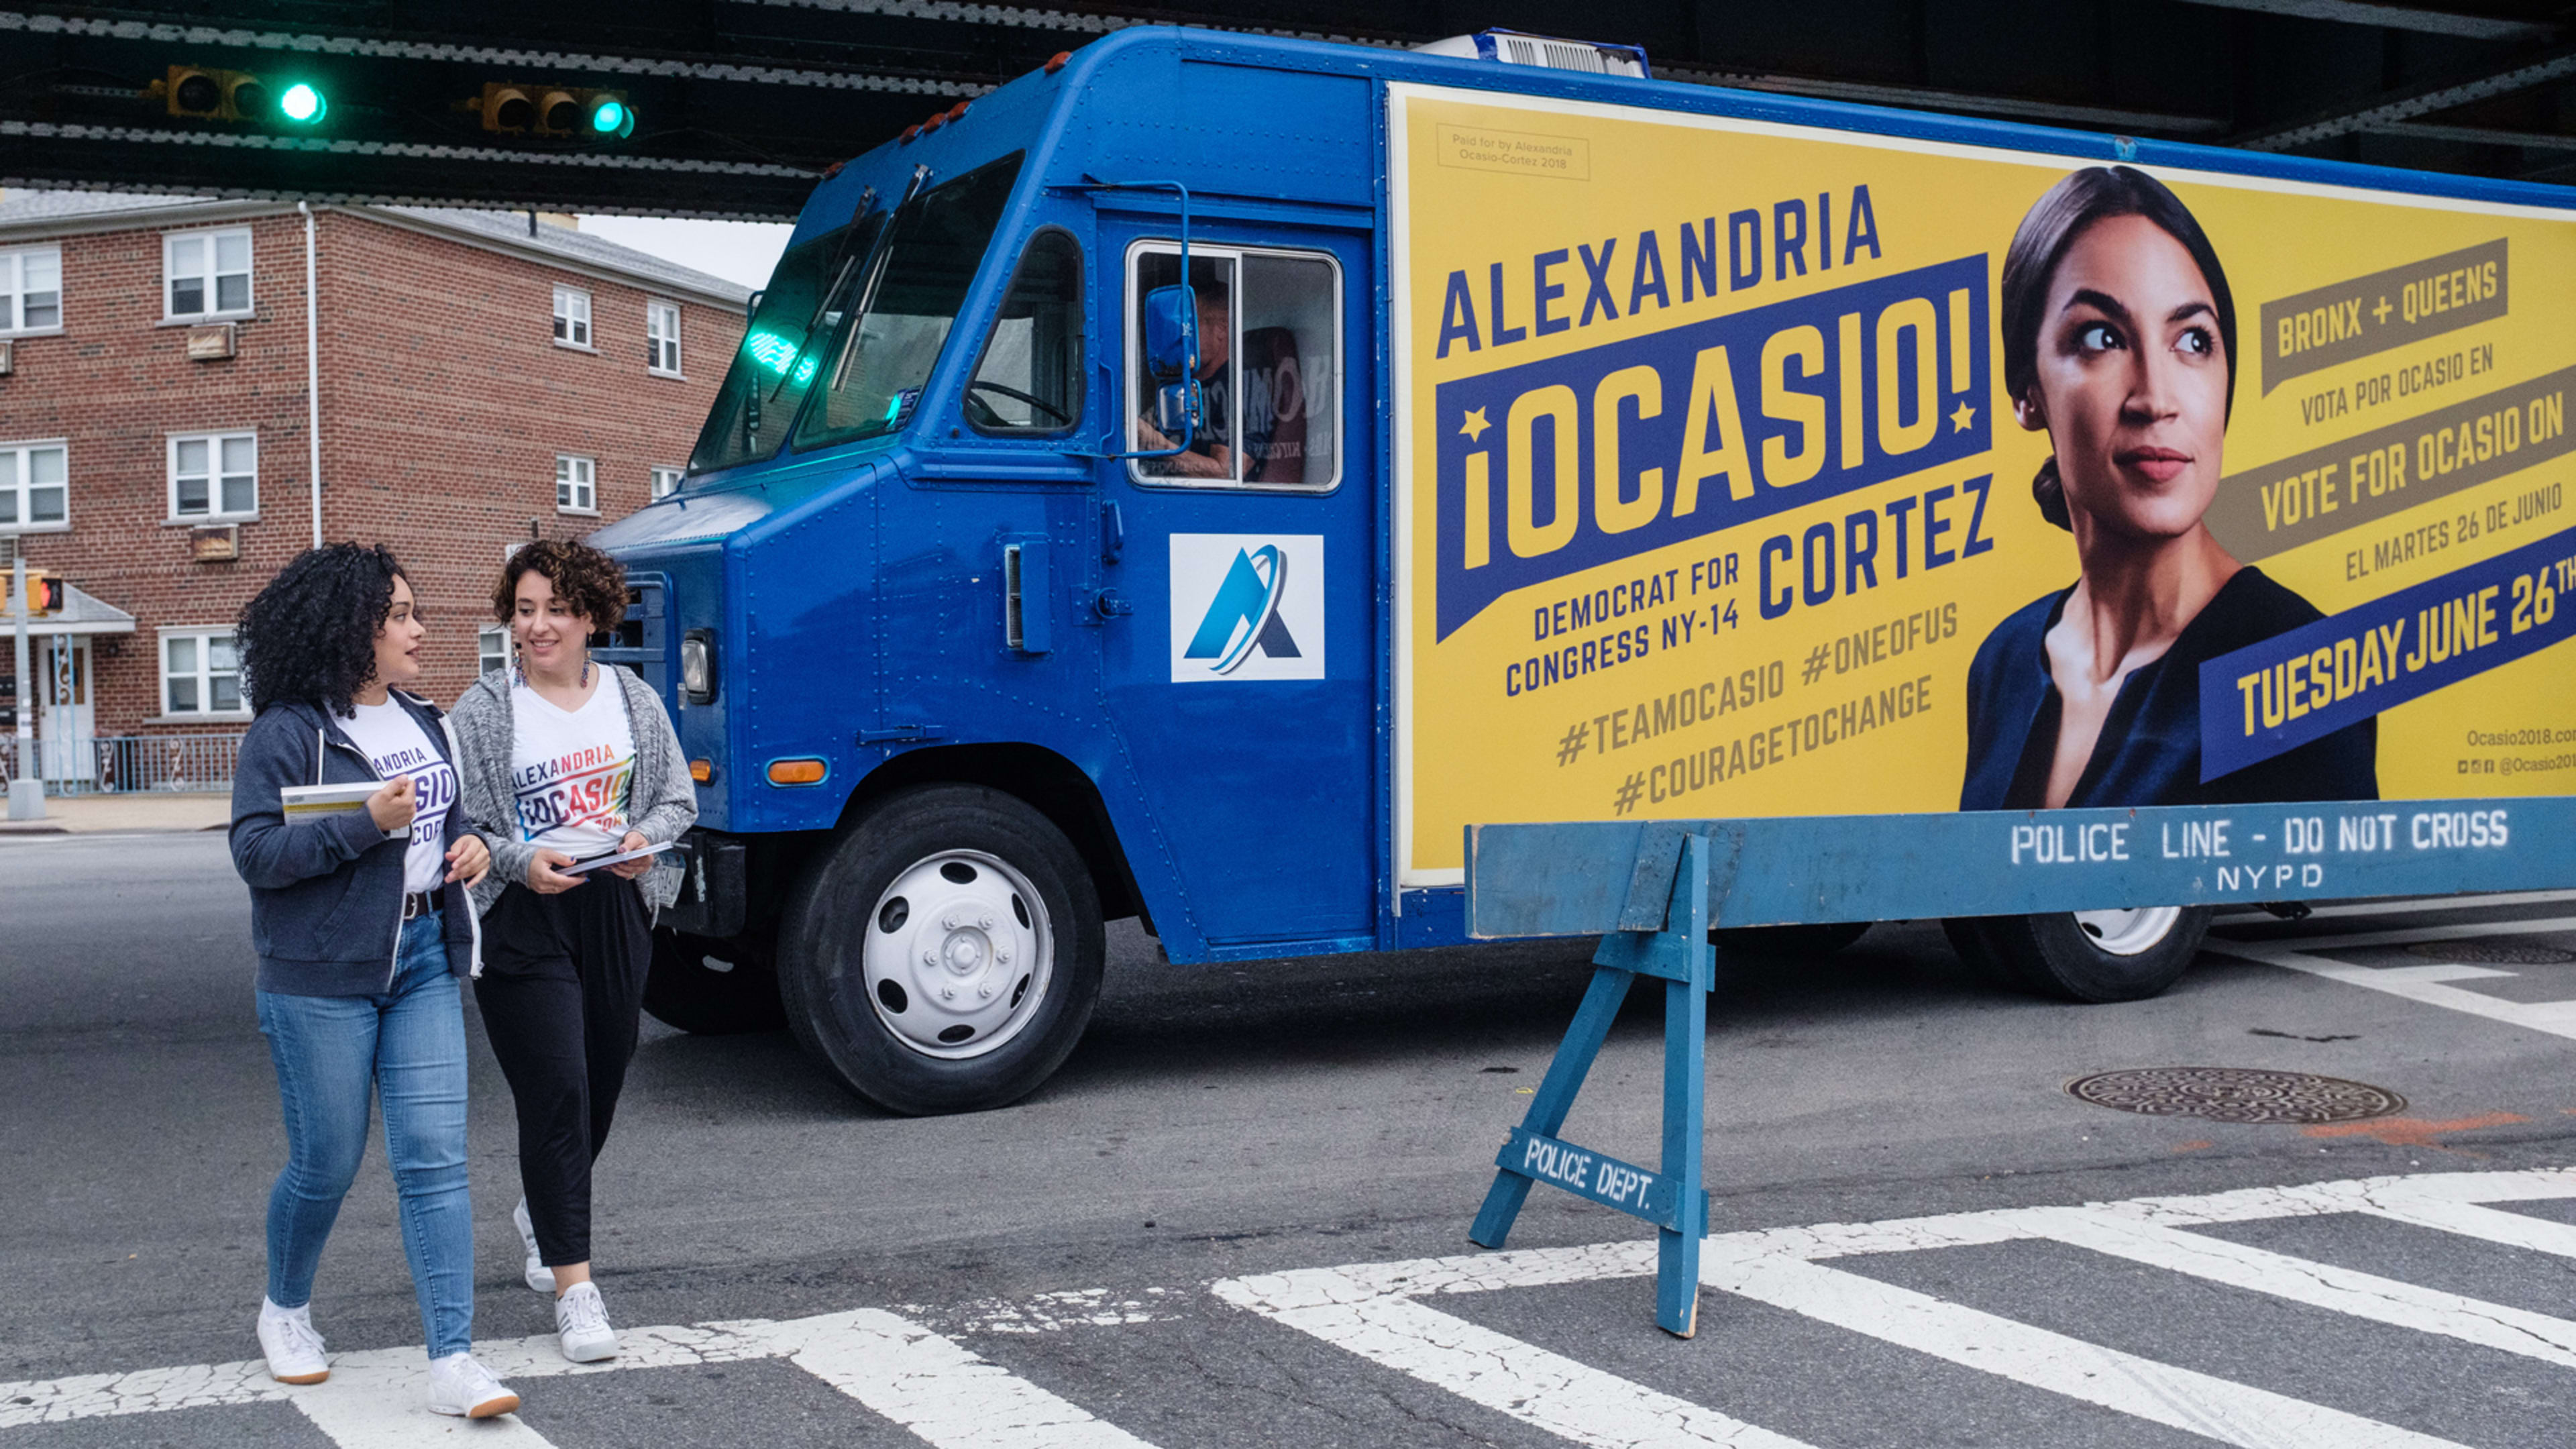 How the Alexandria Ocasio-Cortez campaign got its powerful design